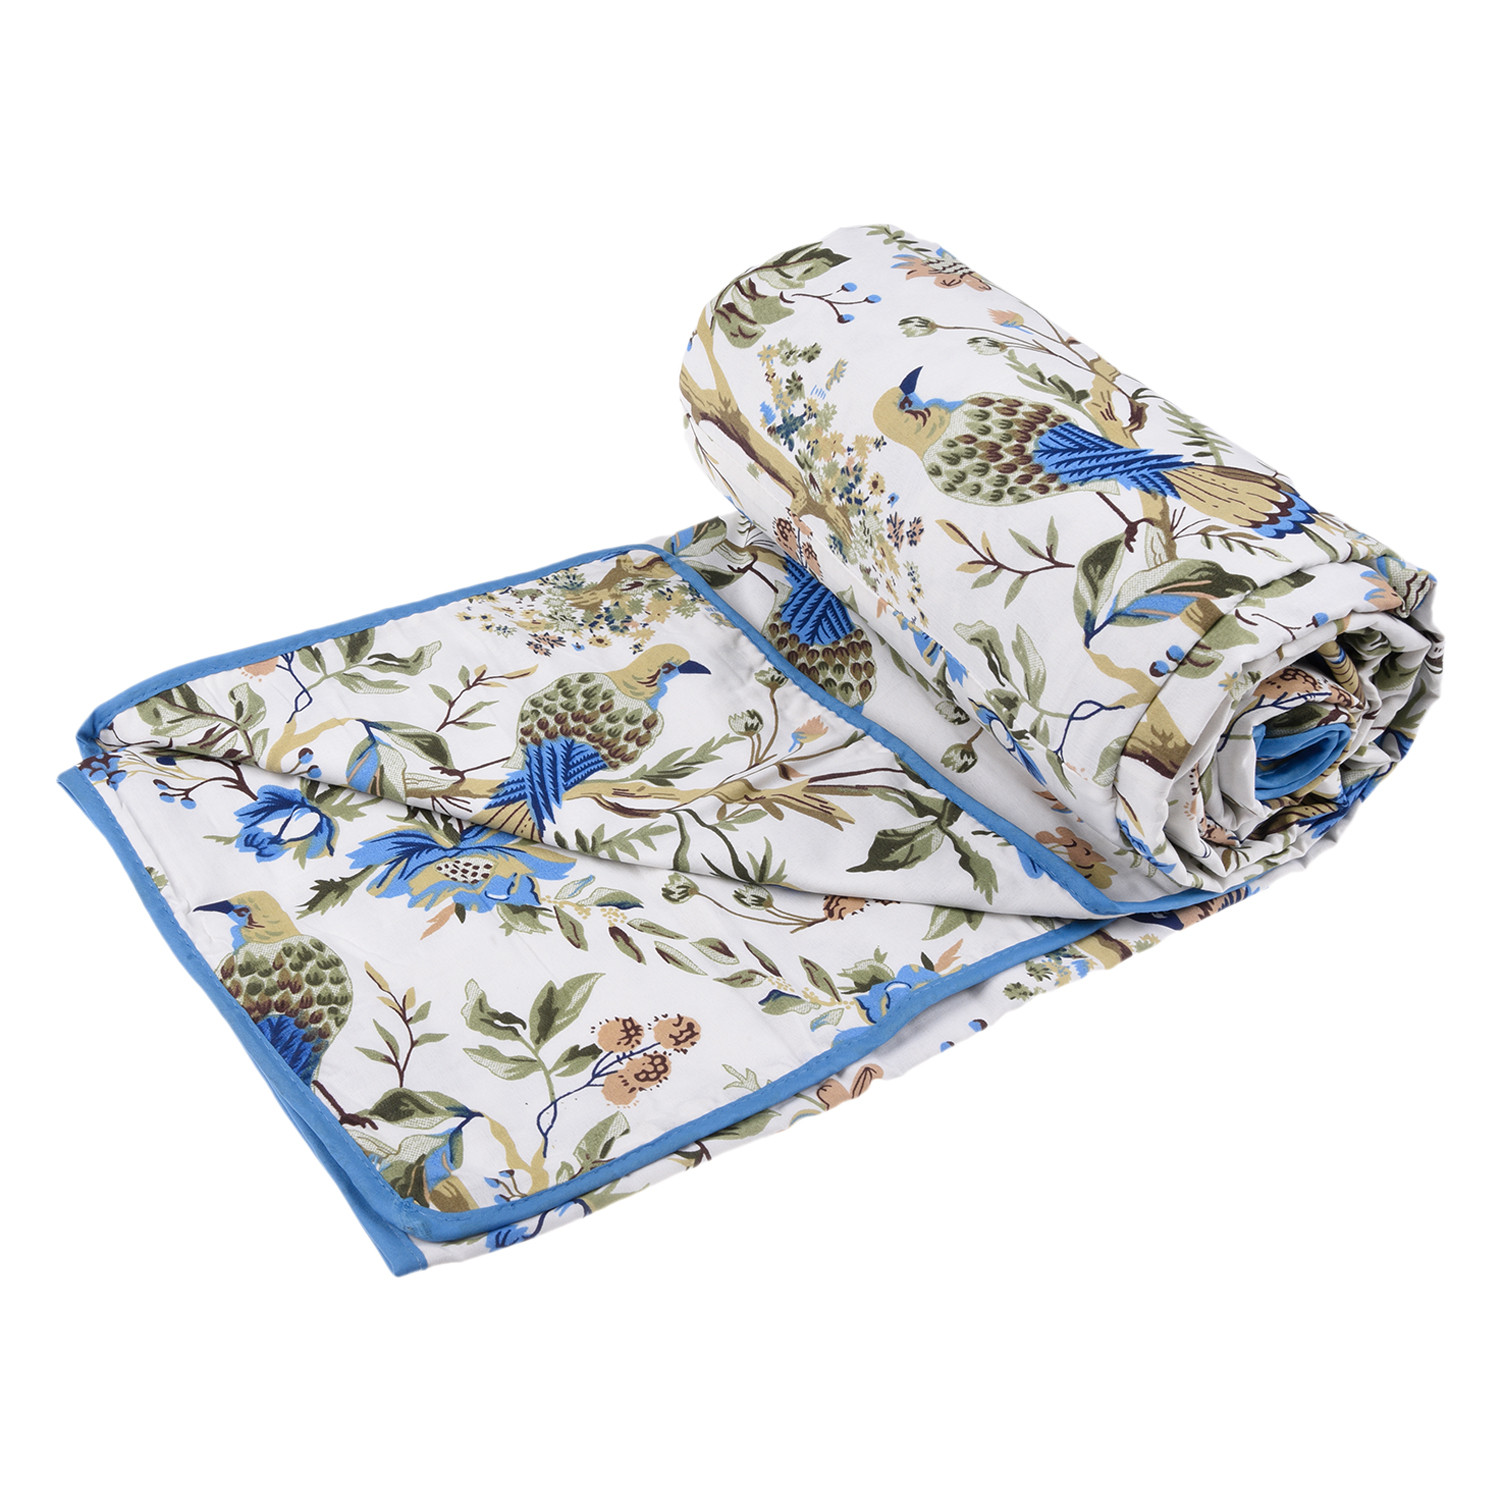 Kuber Industries Blanket | Cotton Double Bed Dohar | Blanket For Home | Reversible AC Blanket For Travelling | Blanket For Summer | Blanket For Winters | Leaf Print | Gray